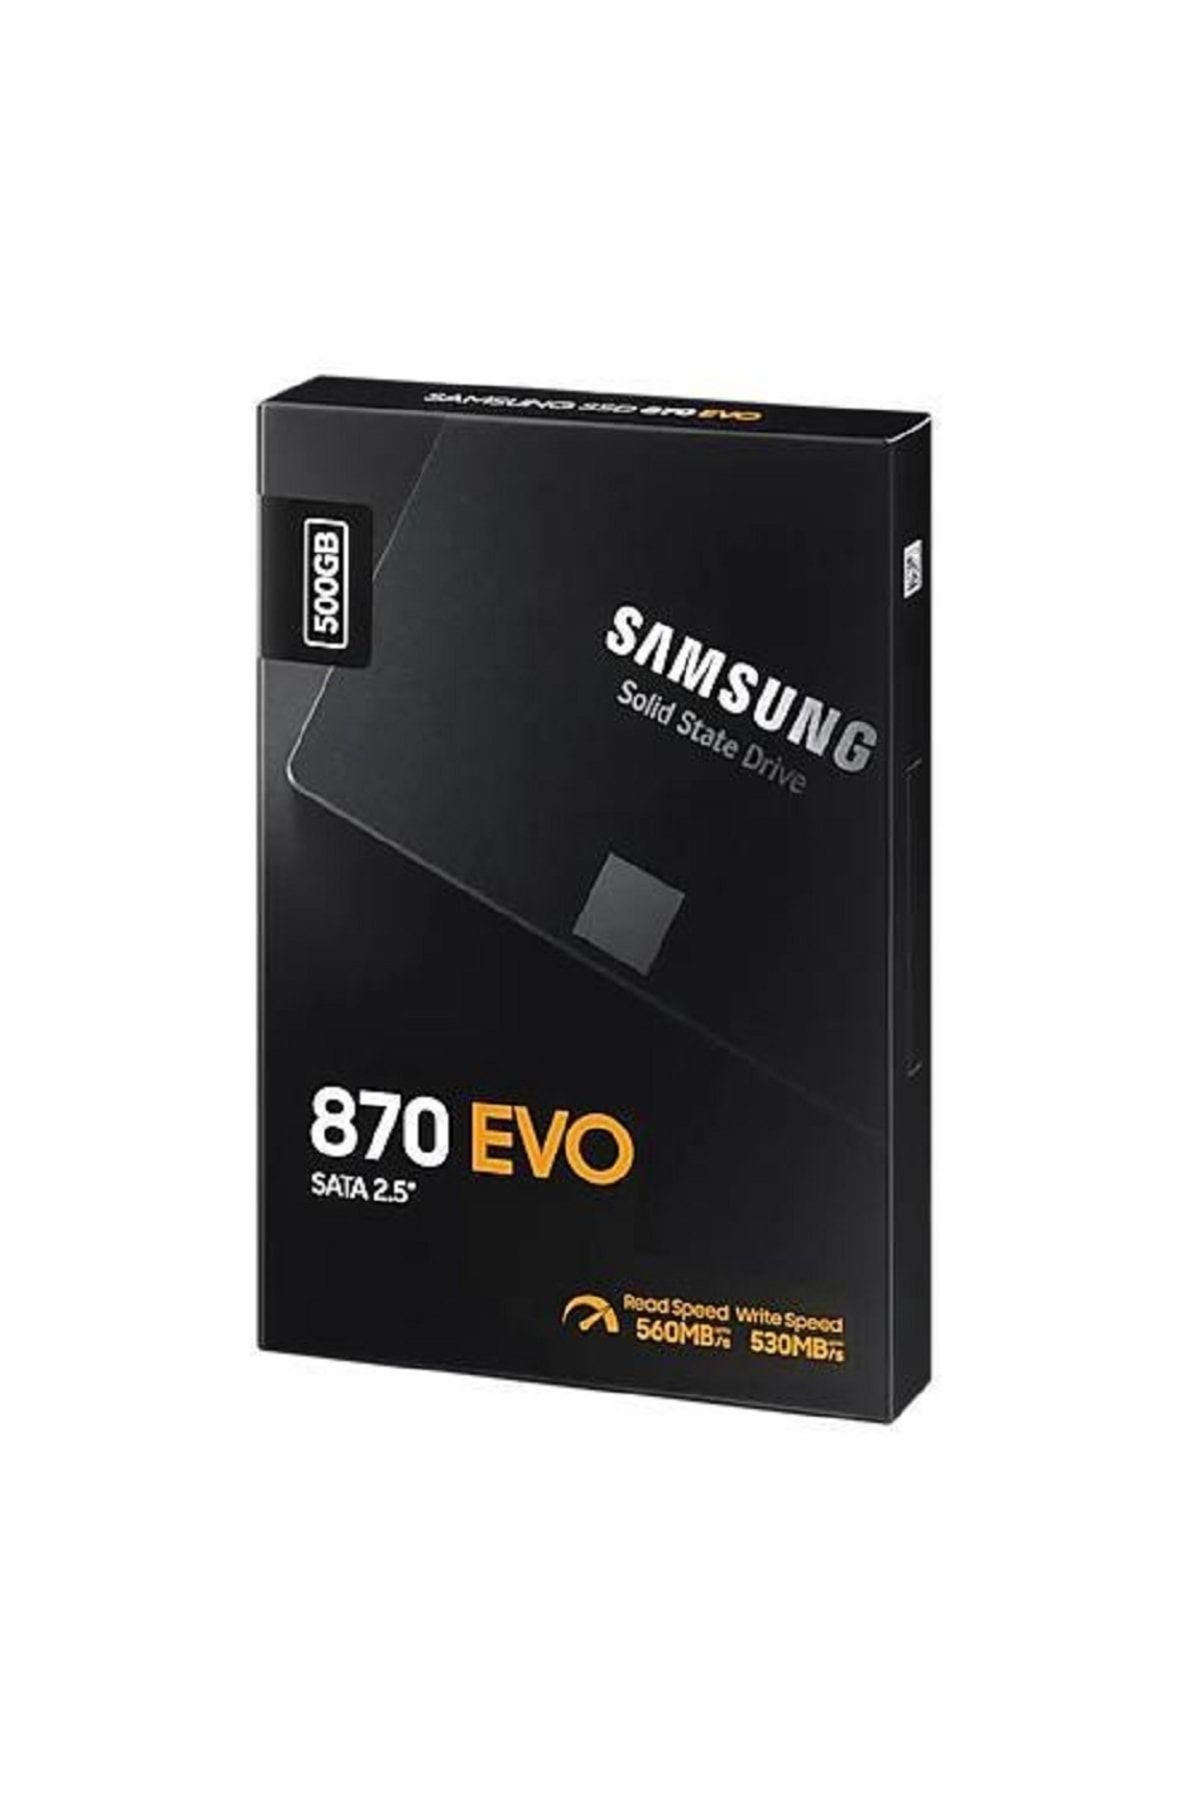 Samsung 870 Evo 500gb Ssd Disk Mz-77e500bw 560 - 530mbs, 2.5, Sata 3